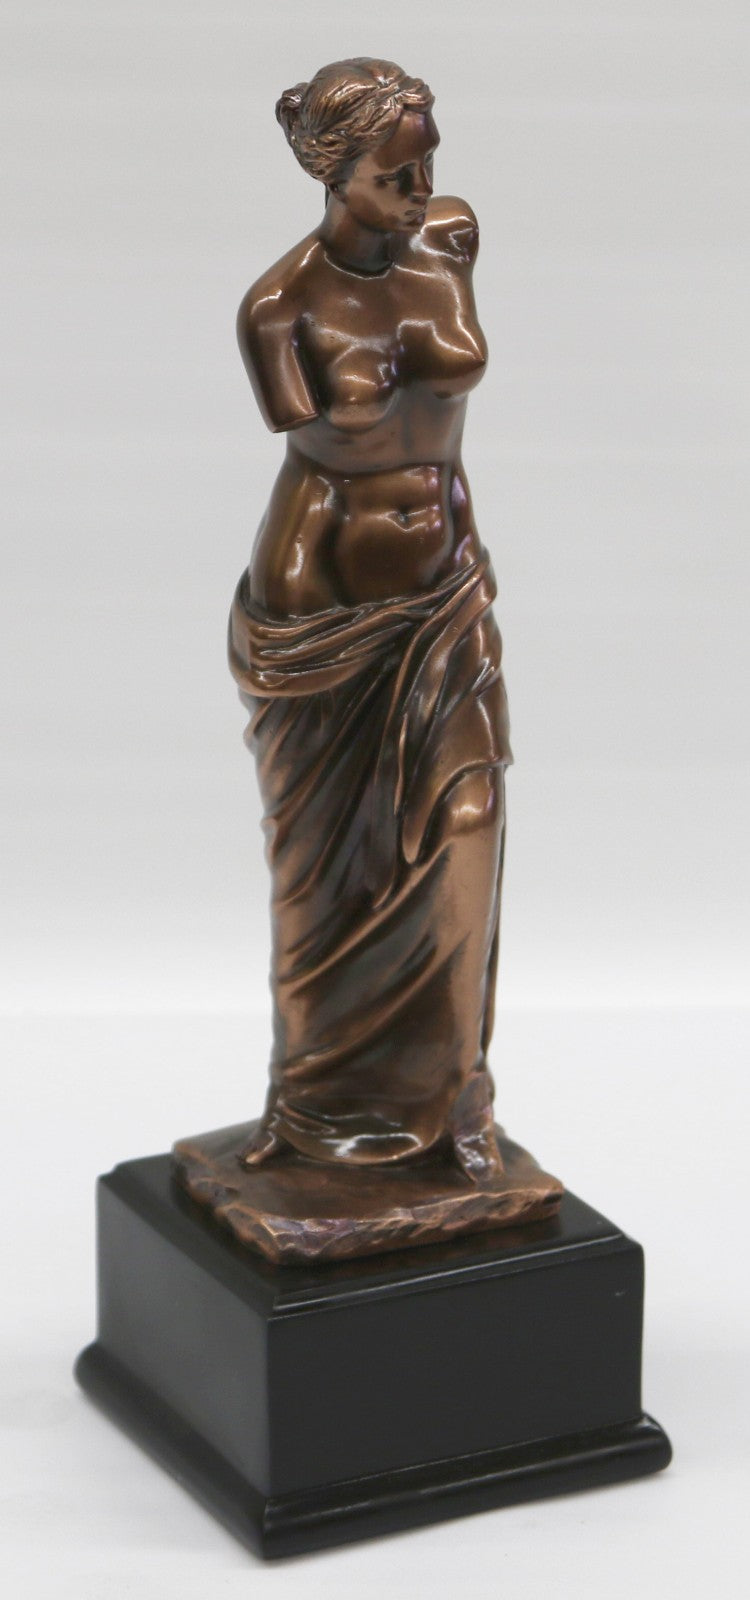 Lovely Bronze Finish Greek Roman Style Statue Of A Woman Venus De Milo Figure